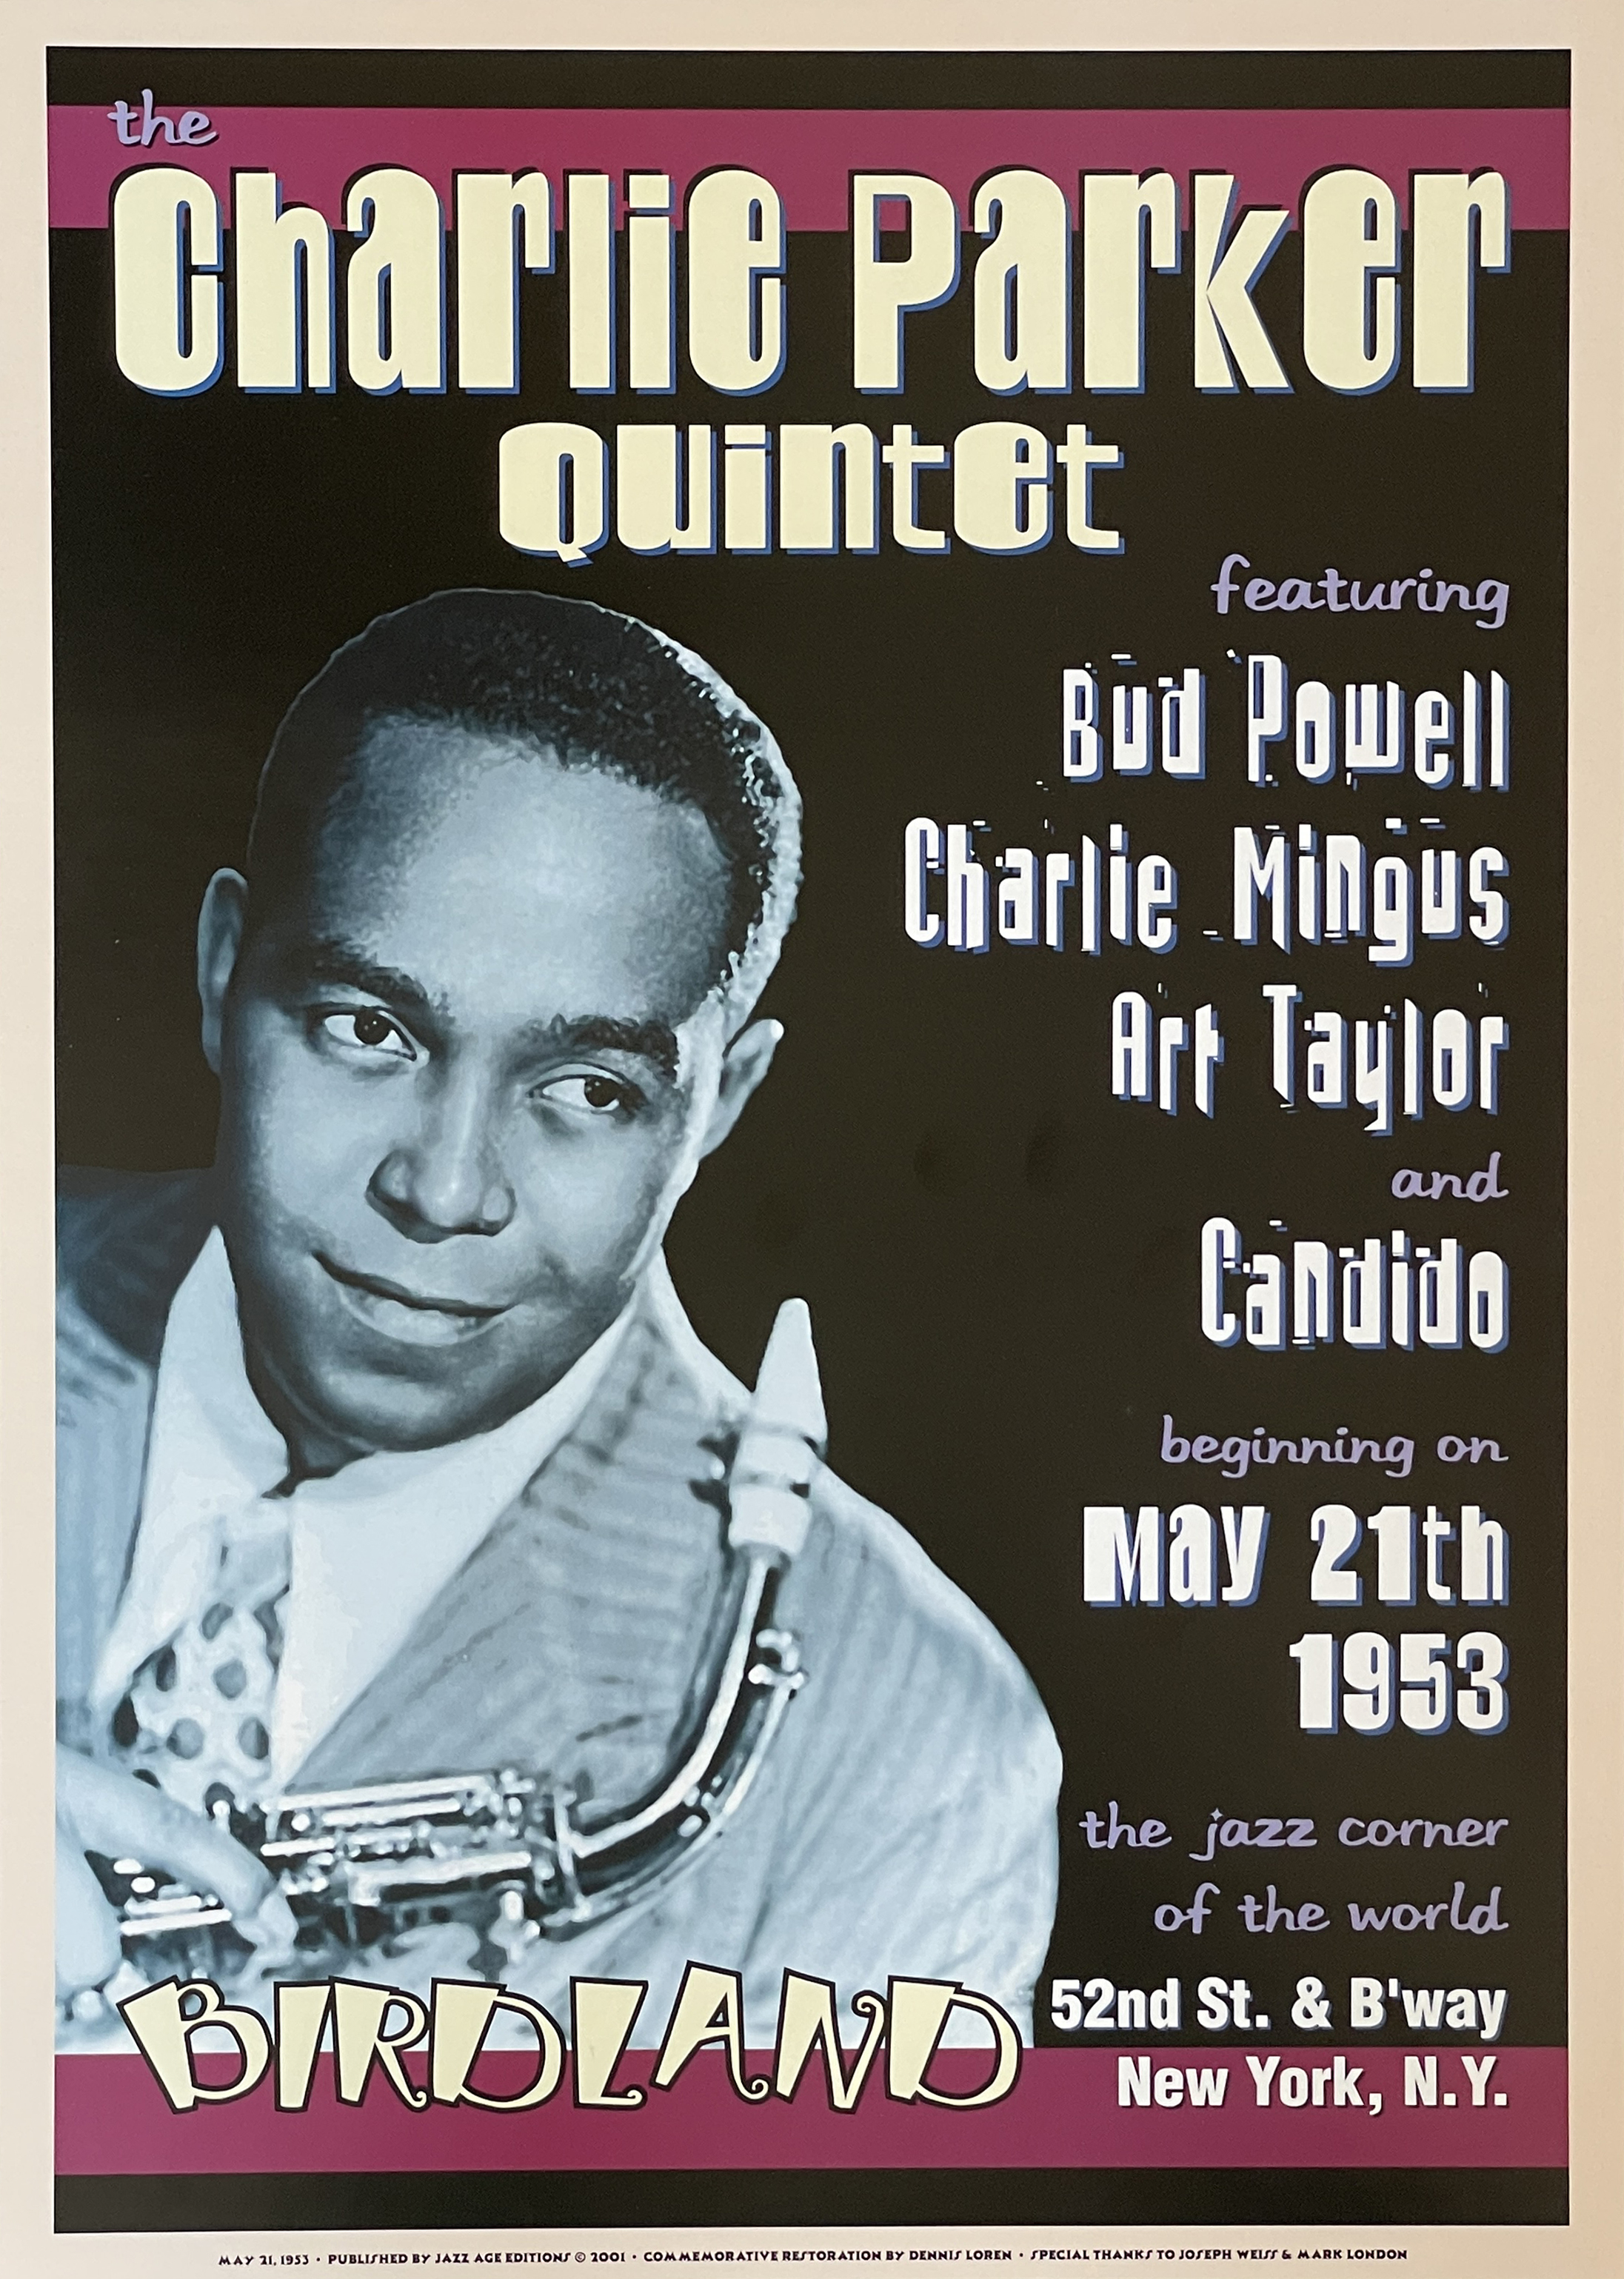 The Charlie Parker Quintet